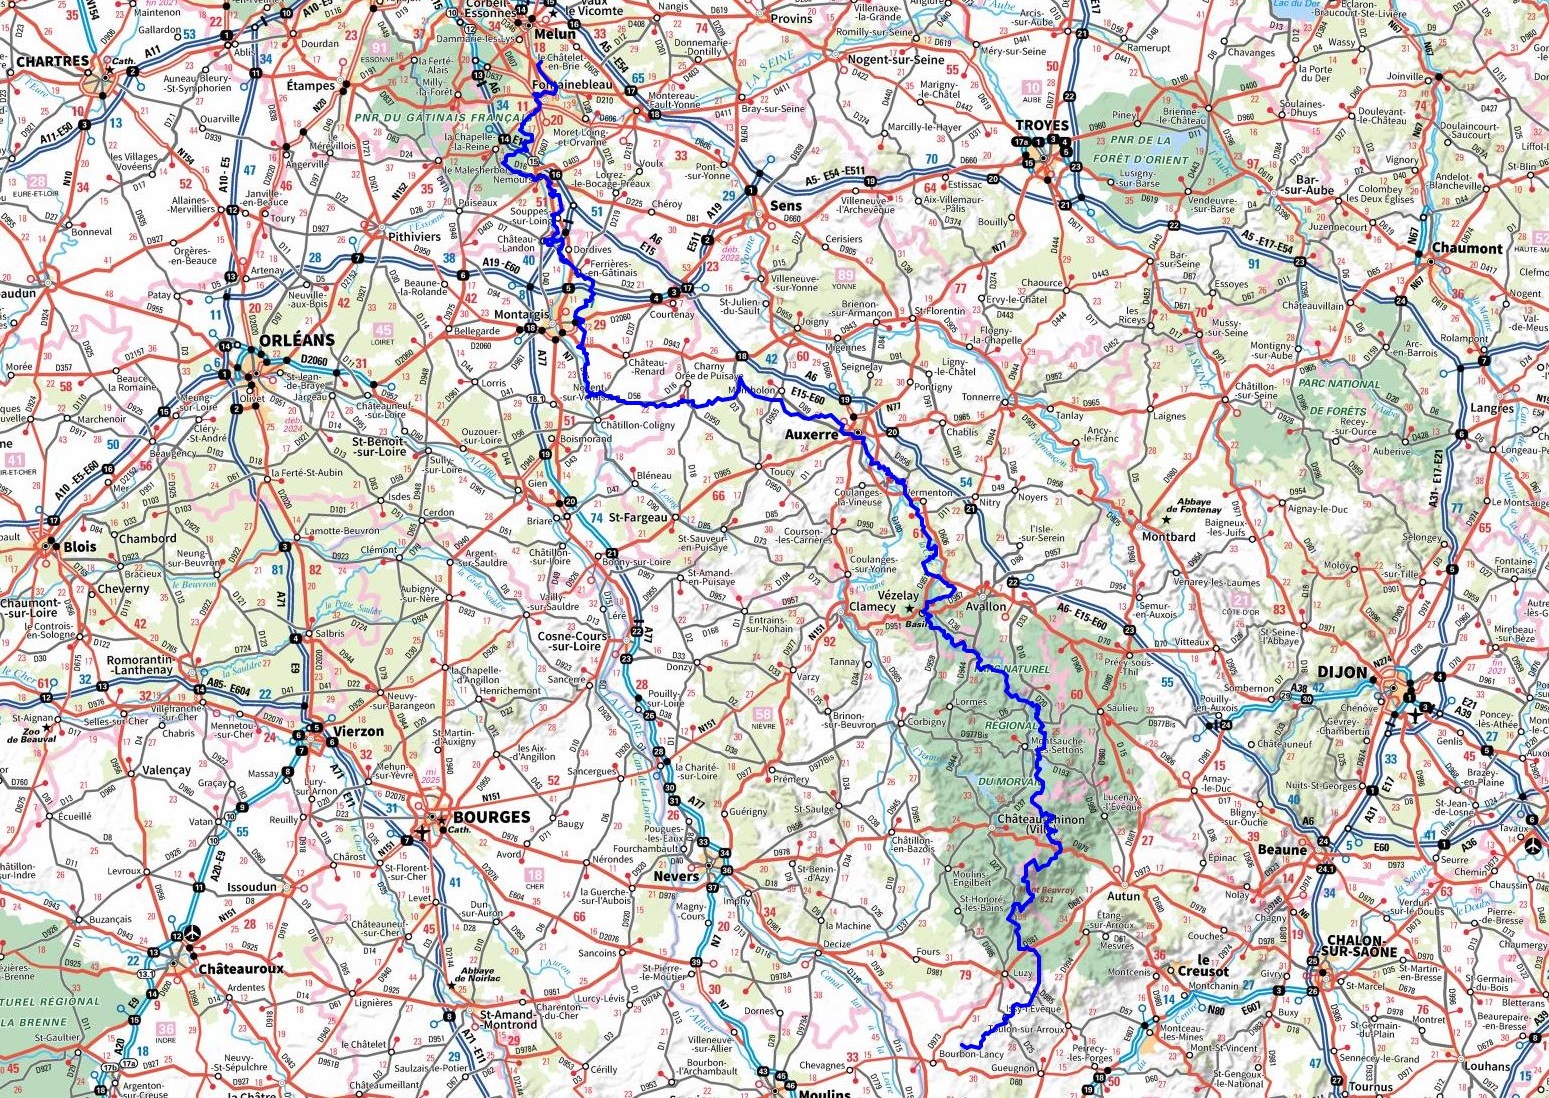 GR13 Hiking from Gatinais (Seine-et-Marne) to Morvan (Saone-et-Loire) 1